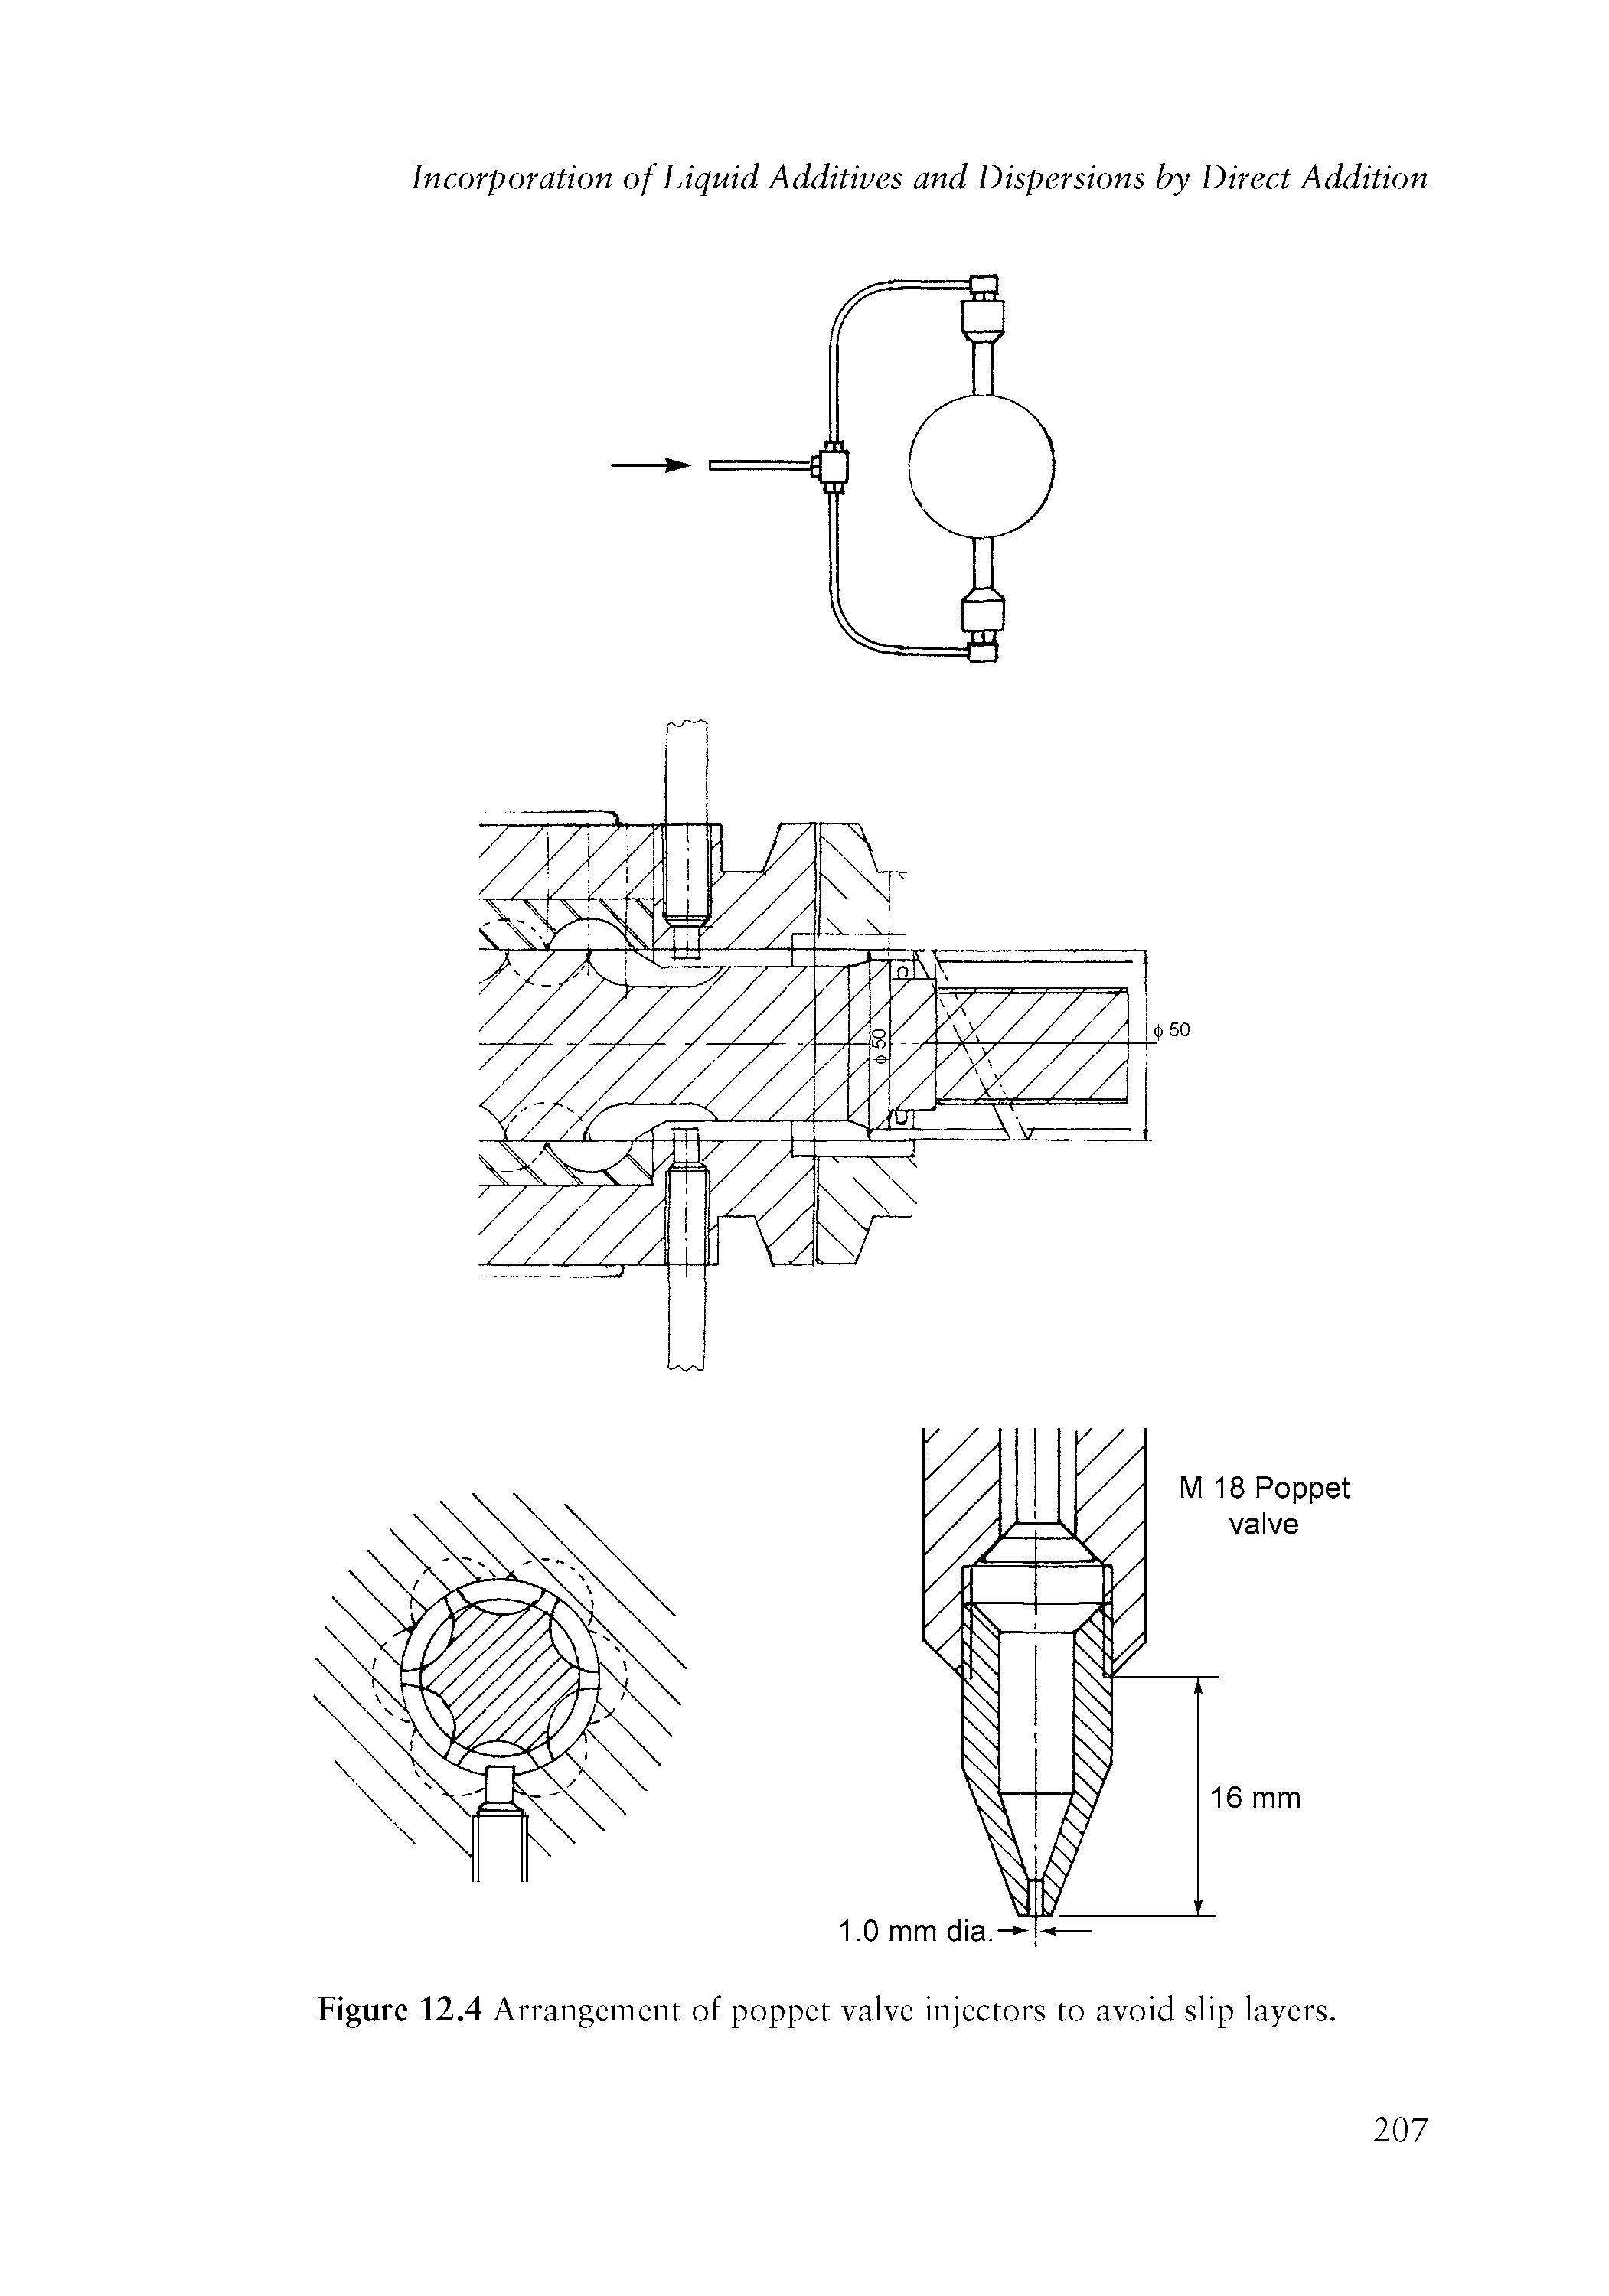 Figure 12.4 Arrangement of poppet valve injectors to avoid slip layers.